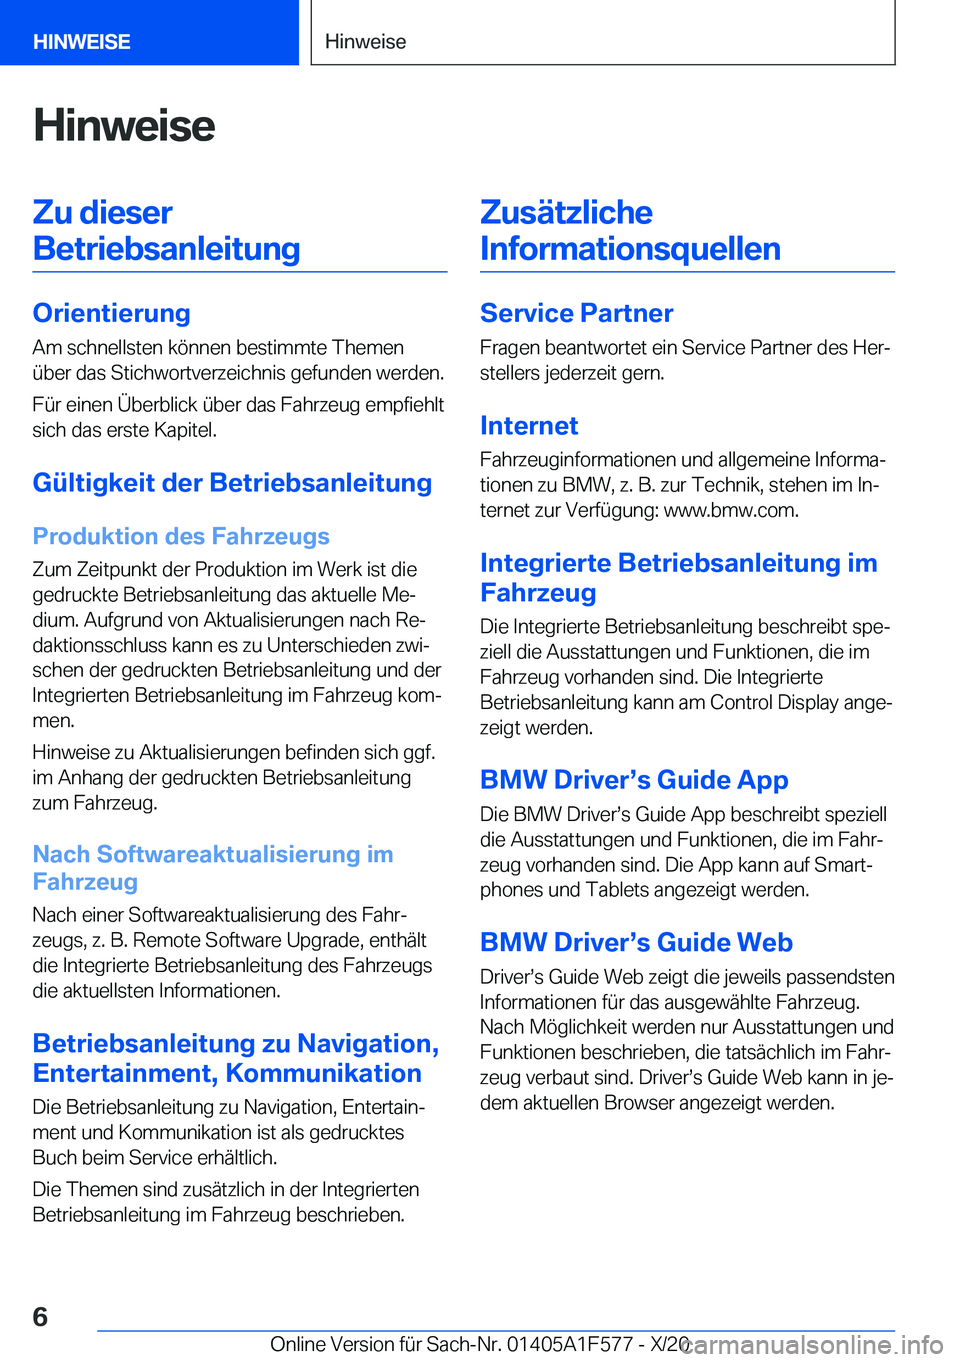 BMW X3 M 2021  Betriebsanleitungen (in German) �H�i�n�w�e�i�s�e�Z�u��d�i�e�s�e�r�B�e�t�r�i�e�b�s�a�n�l�e�i�t�u�n�g
�O�r�i�e�n�t�i�e�r�u�n�g �A�m��s�c�h�n�e�l�l�s�t�e�n��k�